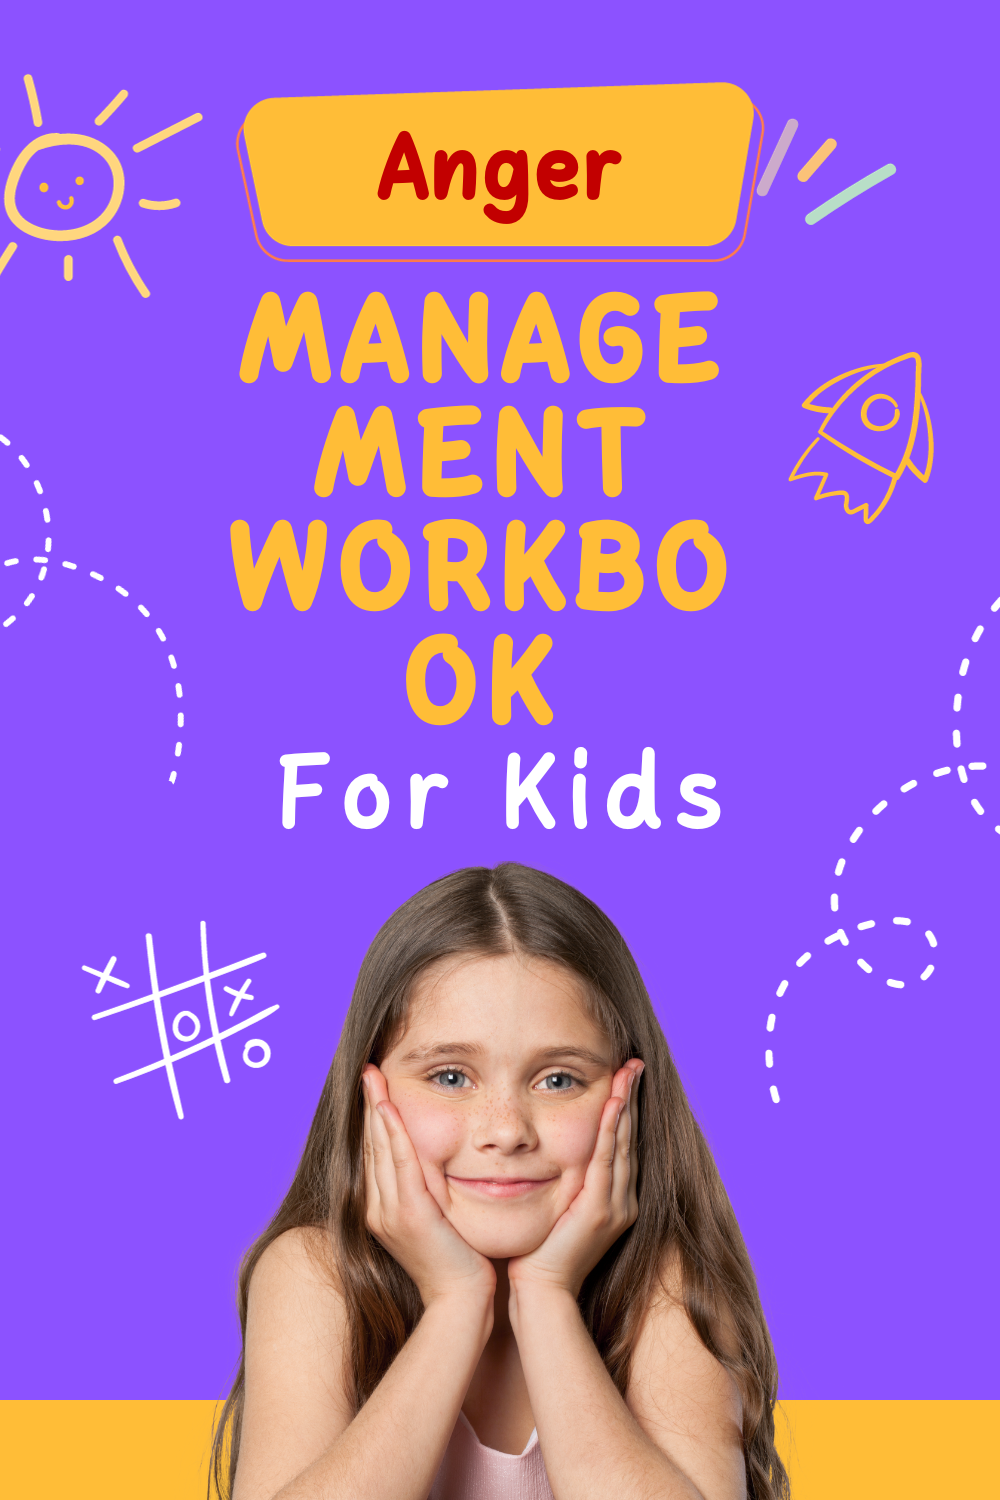 Nurturing Emotional Intelligence: A Comprehensive Review of the Anger Management Workbook for Kids